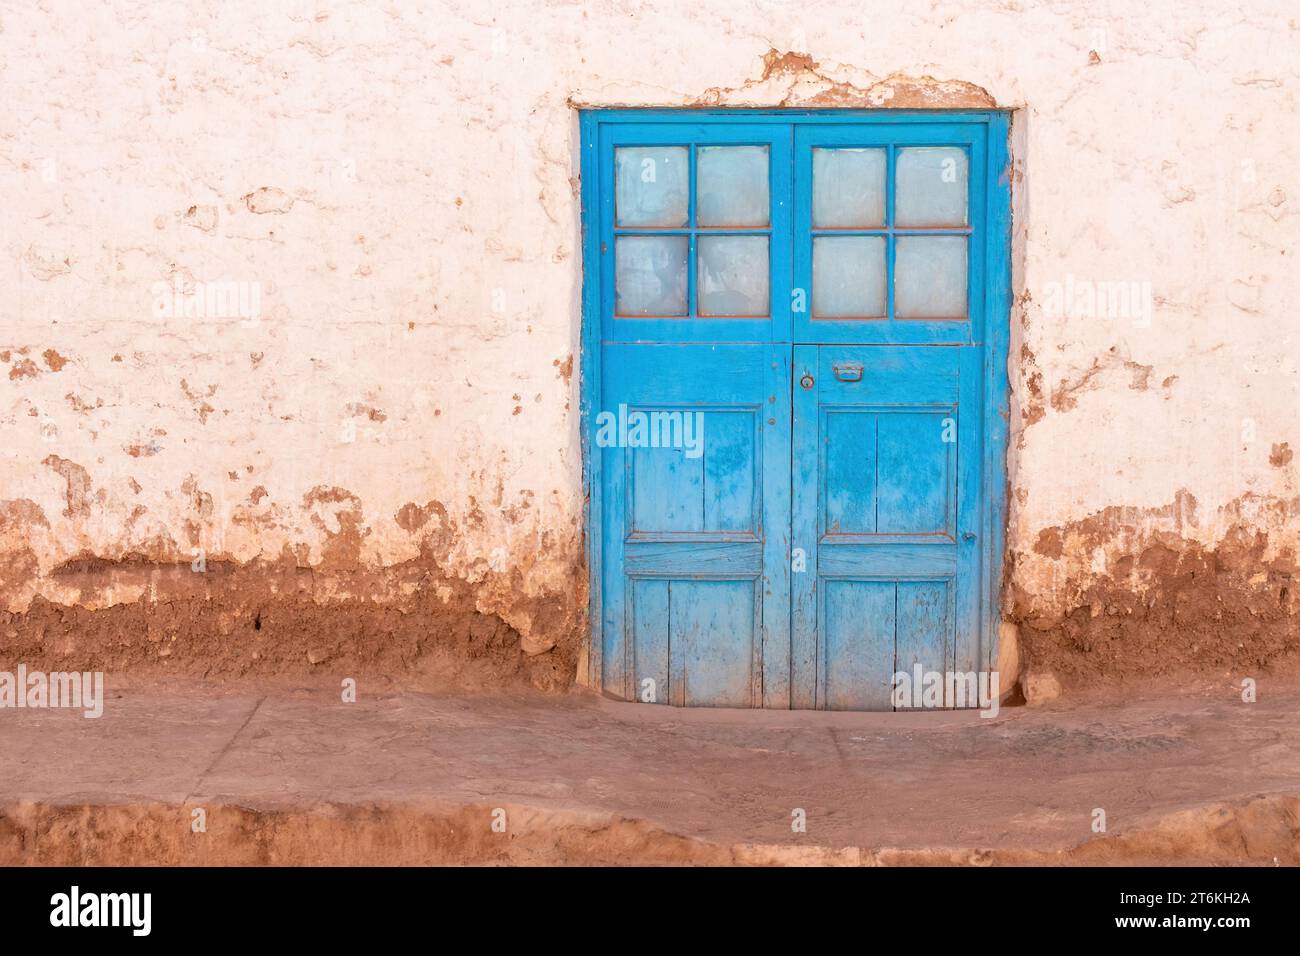 Blue double door with square windows in a building in San Pedro de Atacama, Chile. Stock Photo